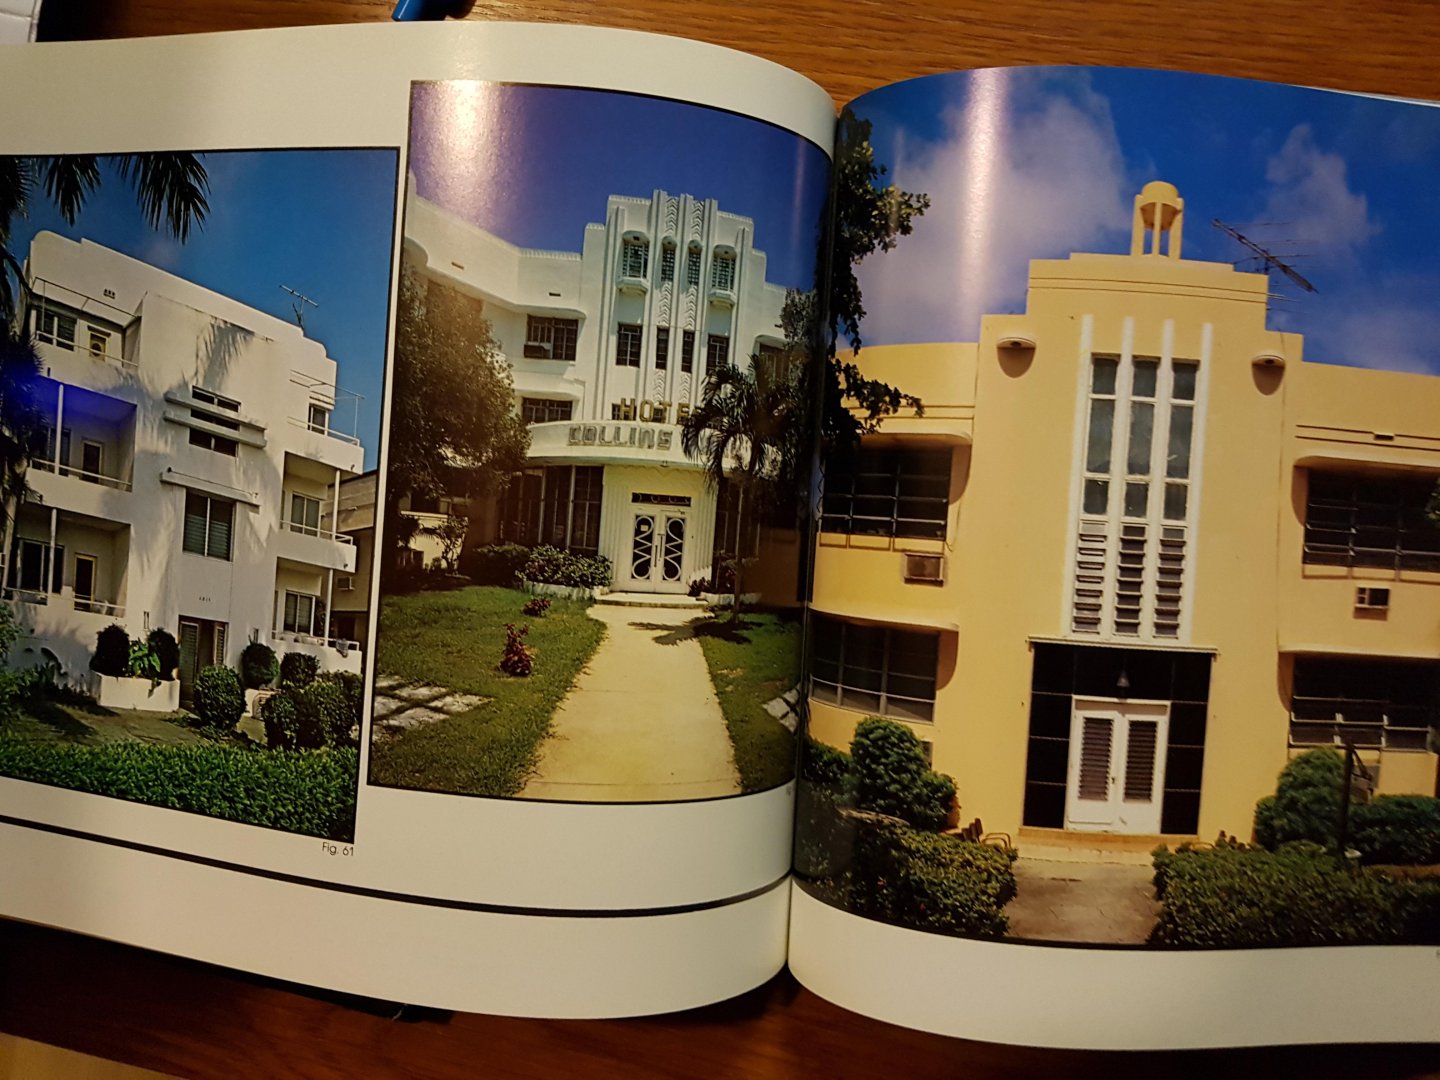 Cerwinske, Laura (tekst) & David Kaminsky (fotografie) - Tropical Deco. The architecture and design of Miami Beach